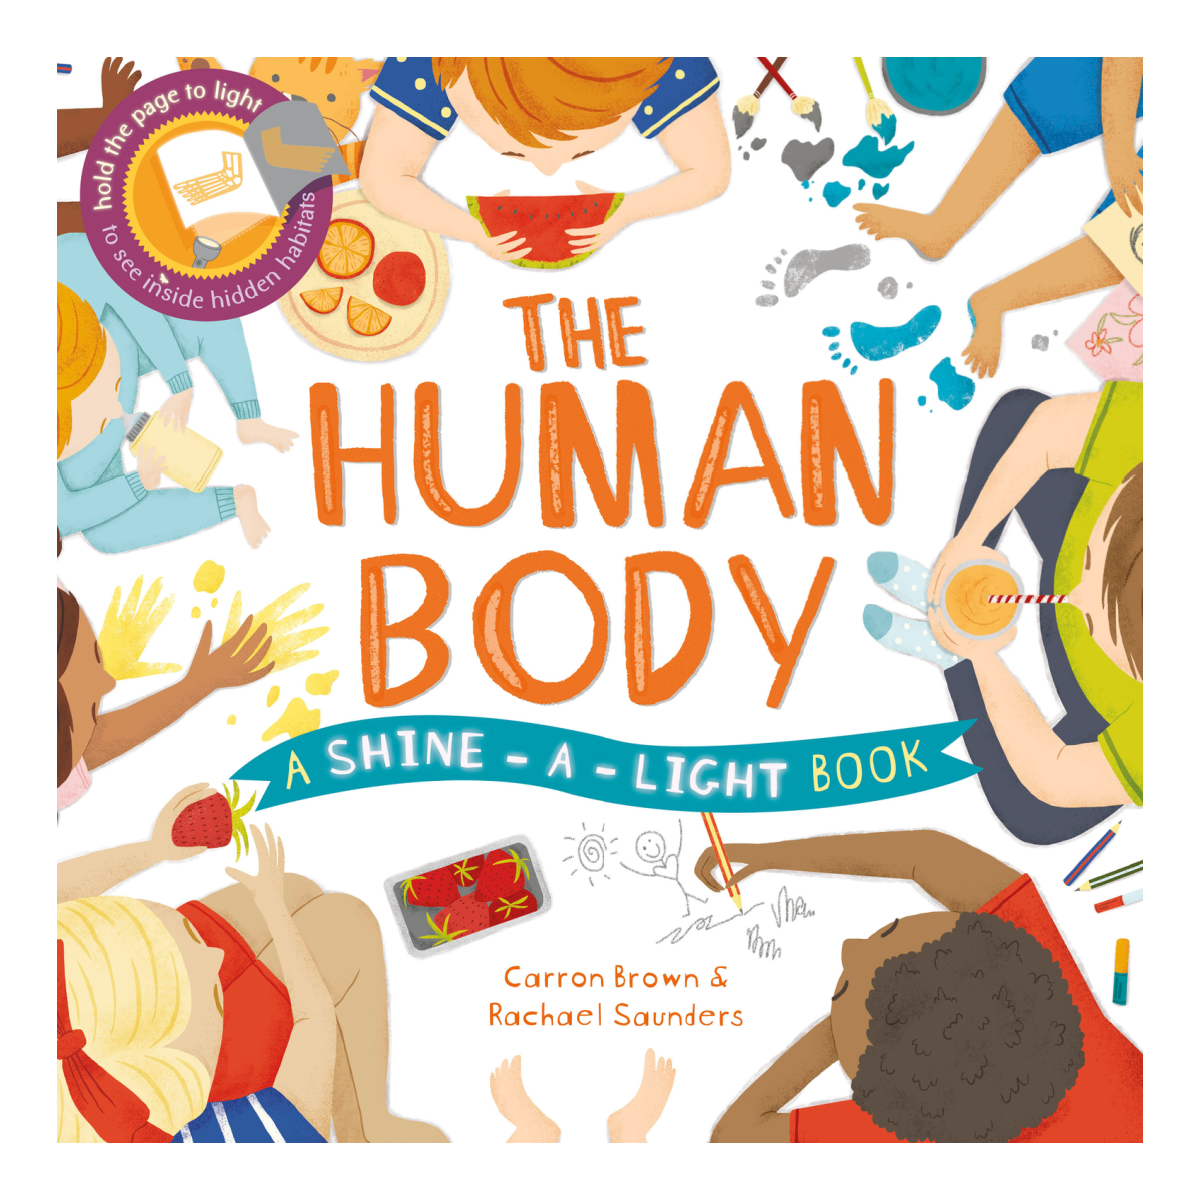 The Human Body - Shine a Light Book